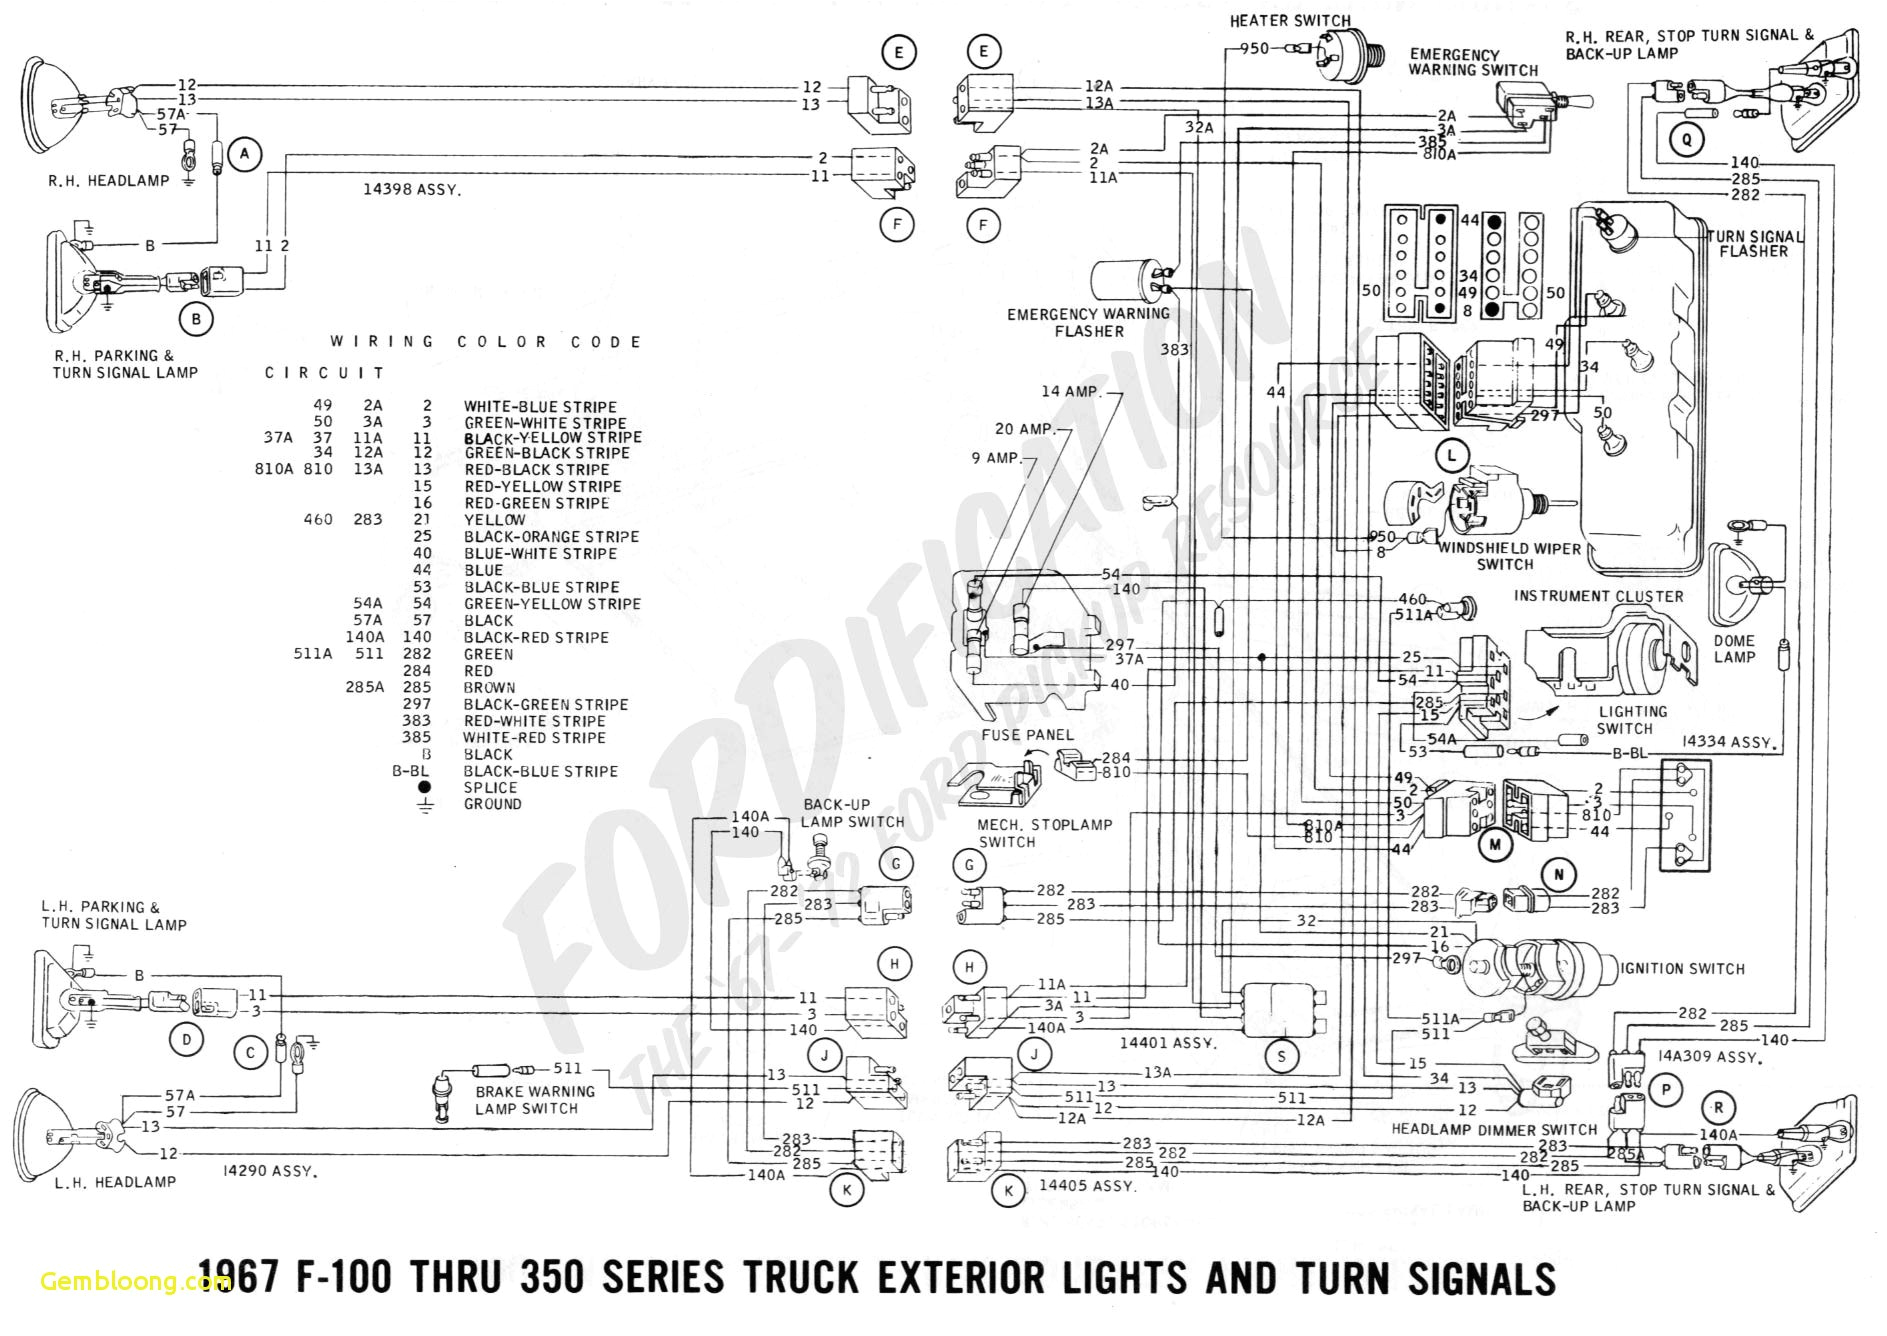 ford f150 wiring diagram wiring diagram database download ford trucks wiring diagrams ford f150 wiring